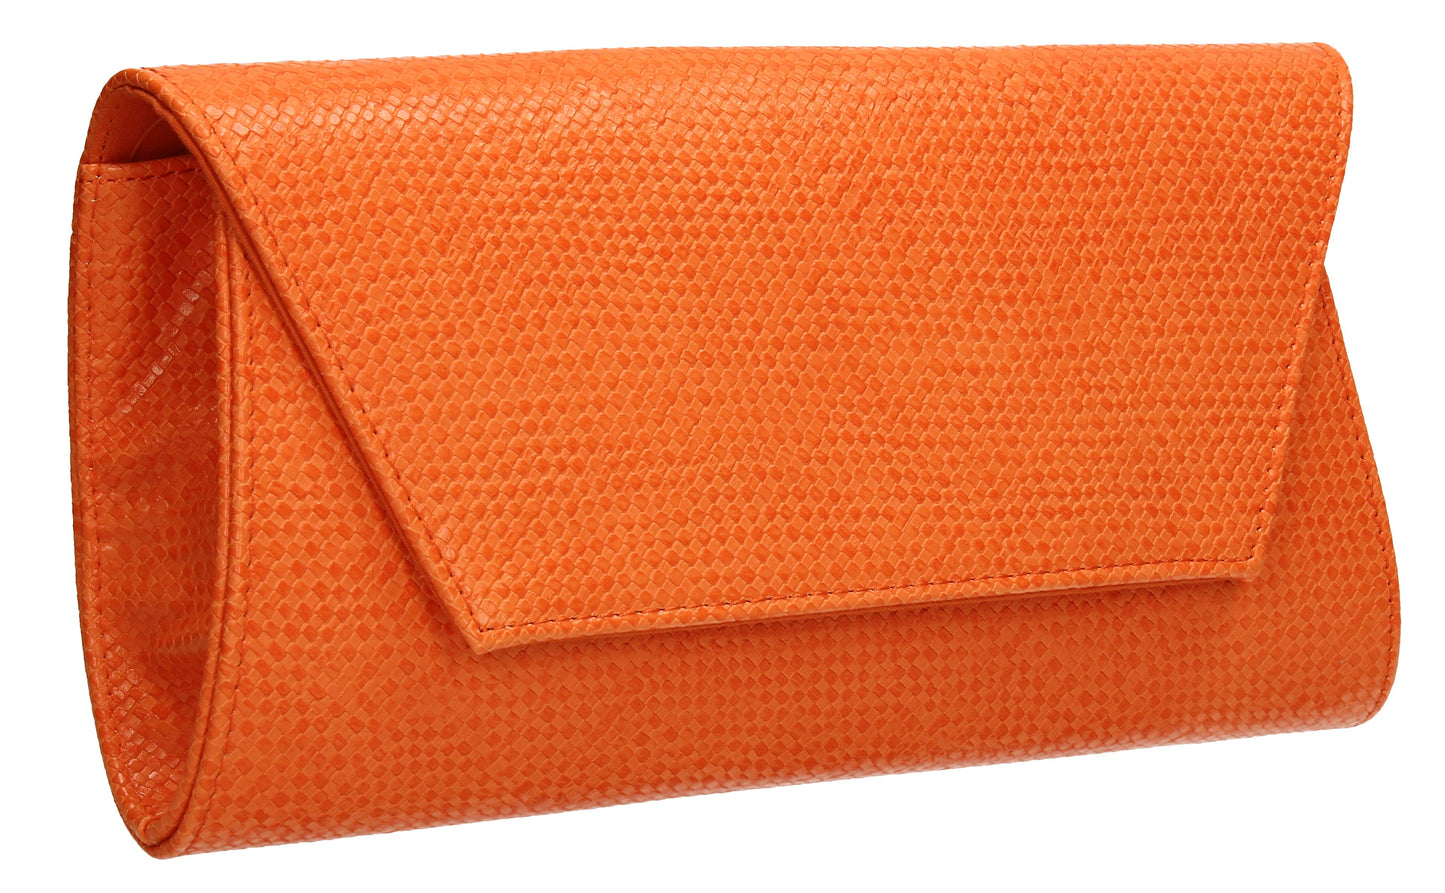 SWANKYSWANS Merci Micro Clutch Bag Scarlet Orange Cute Cheap Clutch Bag For Weddings School and Work